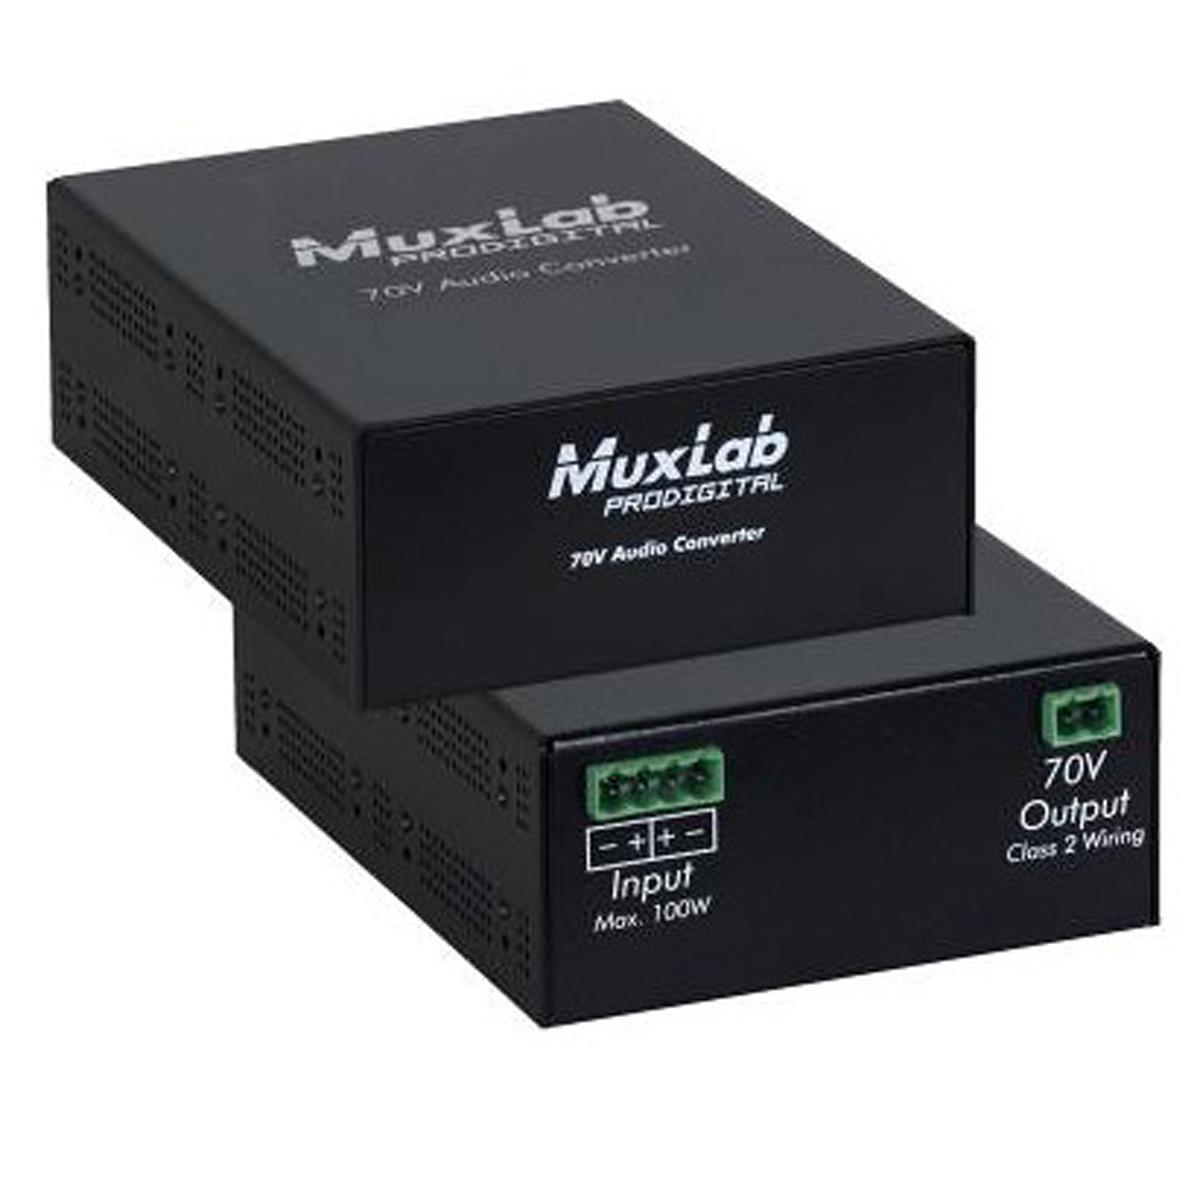 Image of Muxlab MuxLab 70V Audio Converter